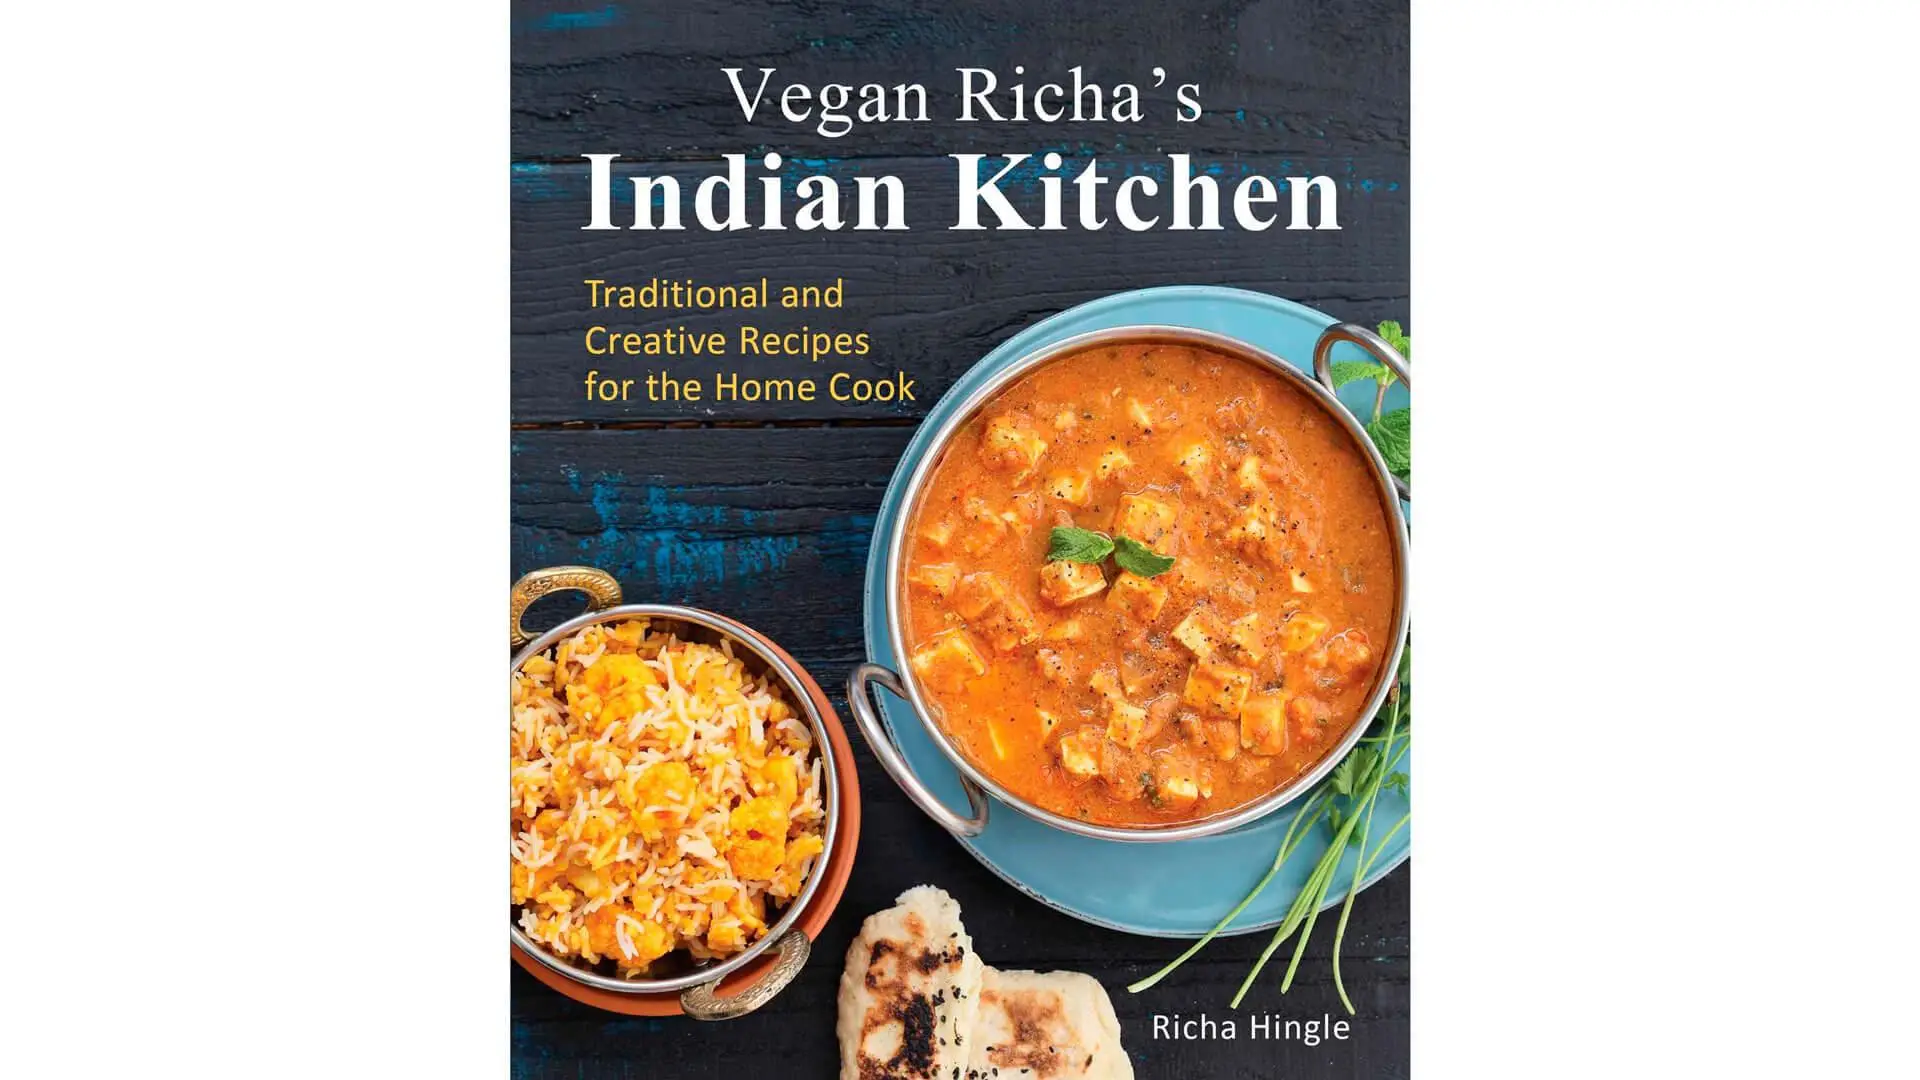 Vegan Cookbook: Vegan Richa's Indian Kitchen